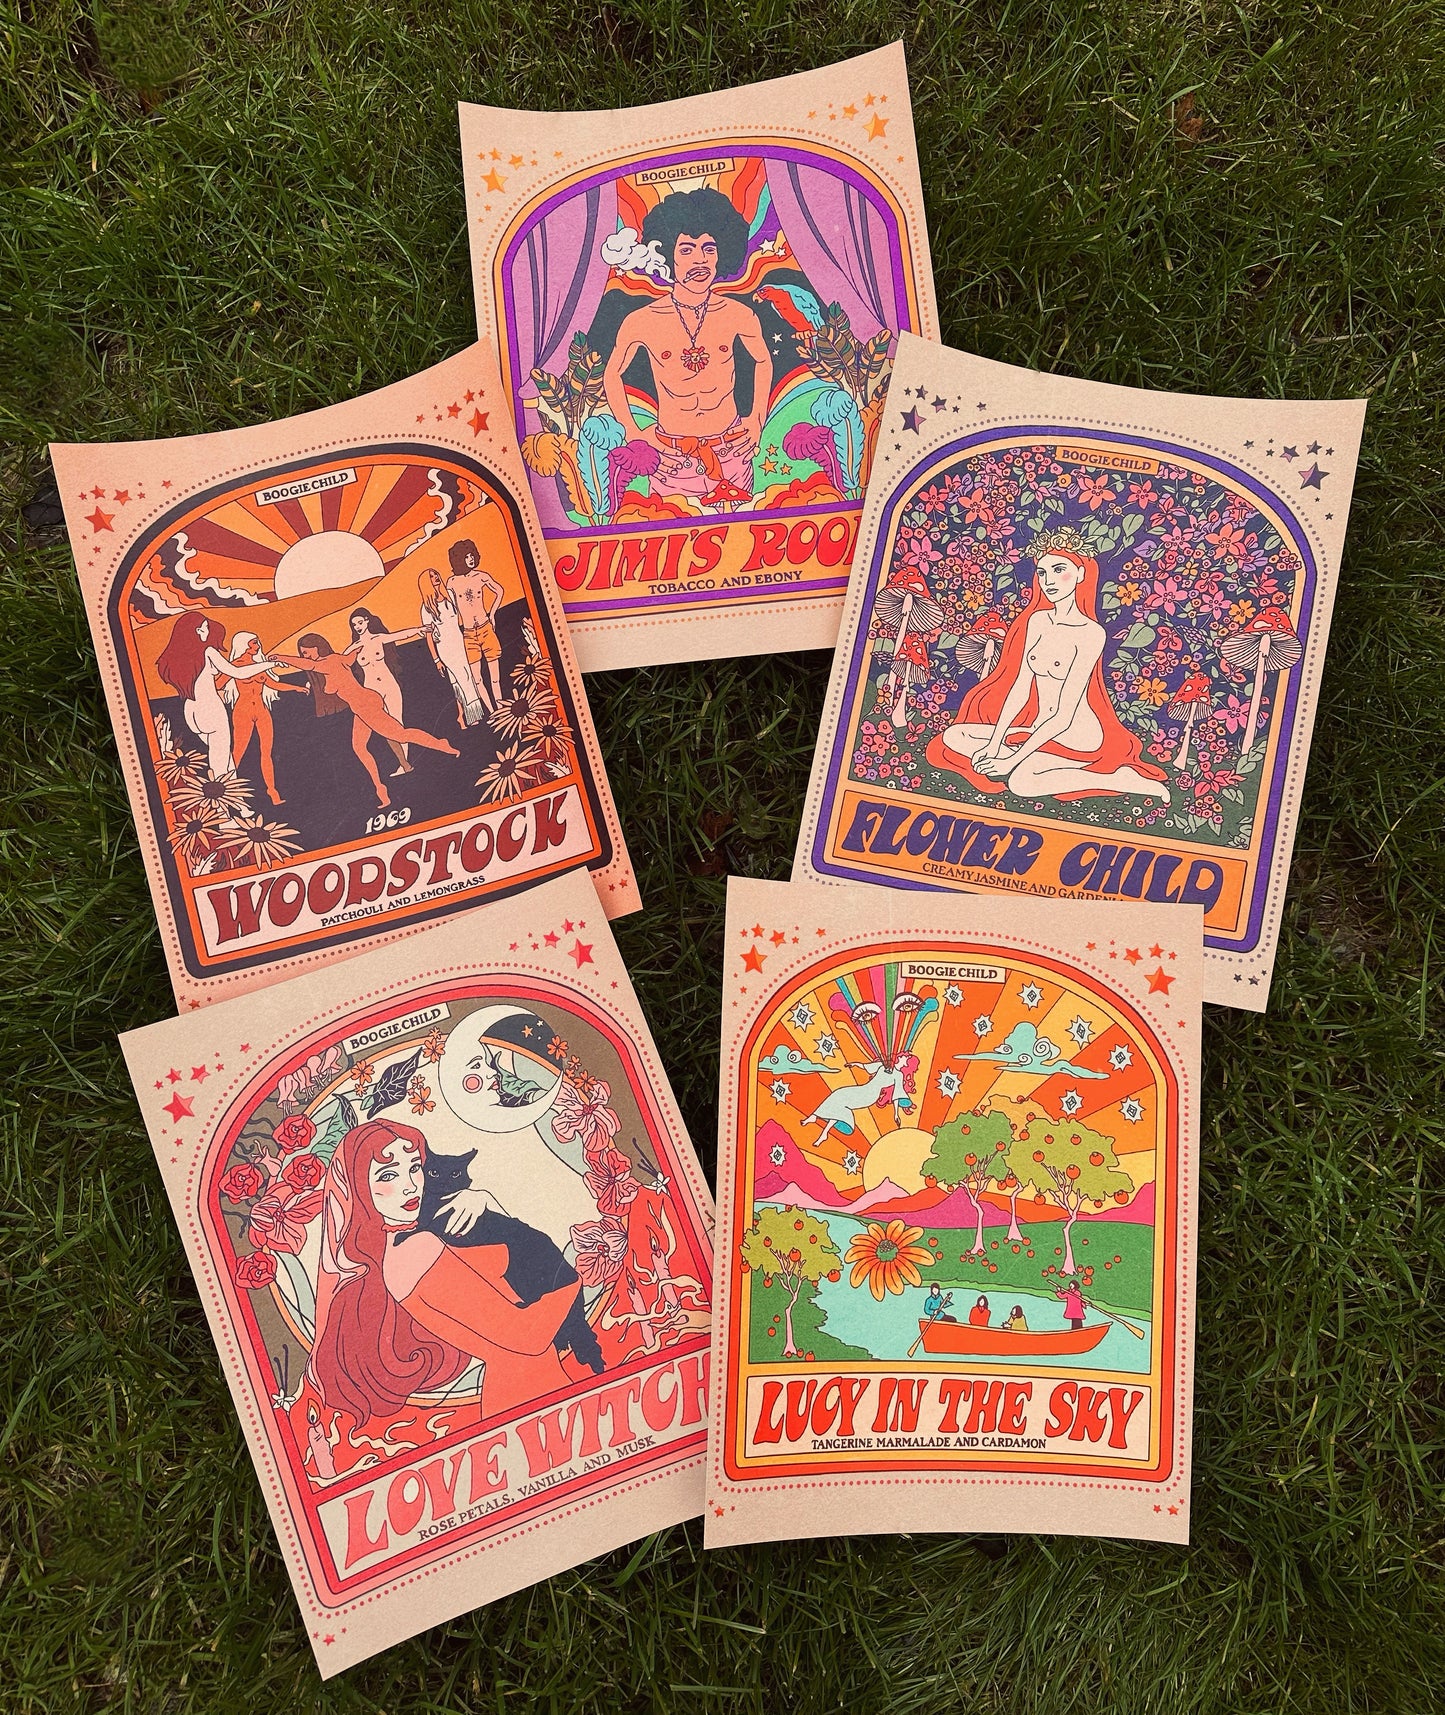 Woodstock 1969 Print - Size 11" x 14"